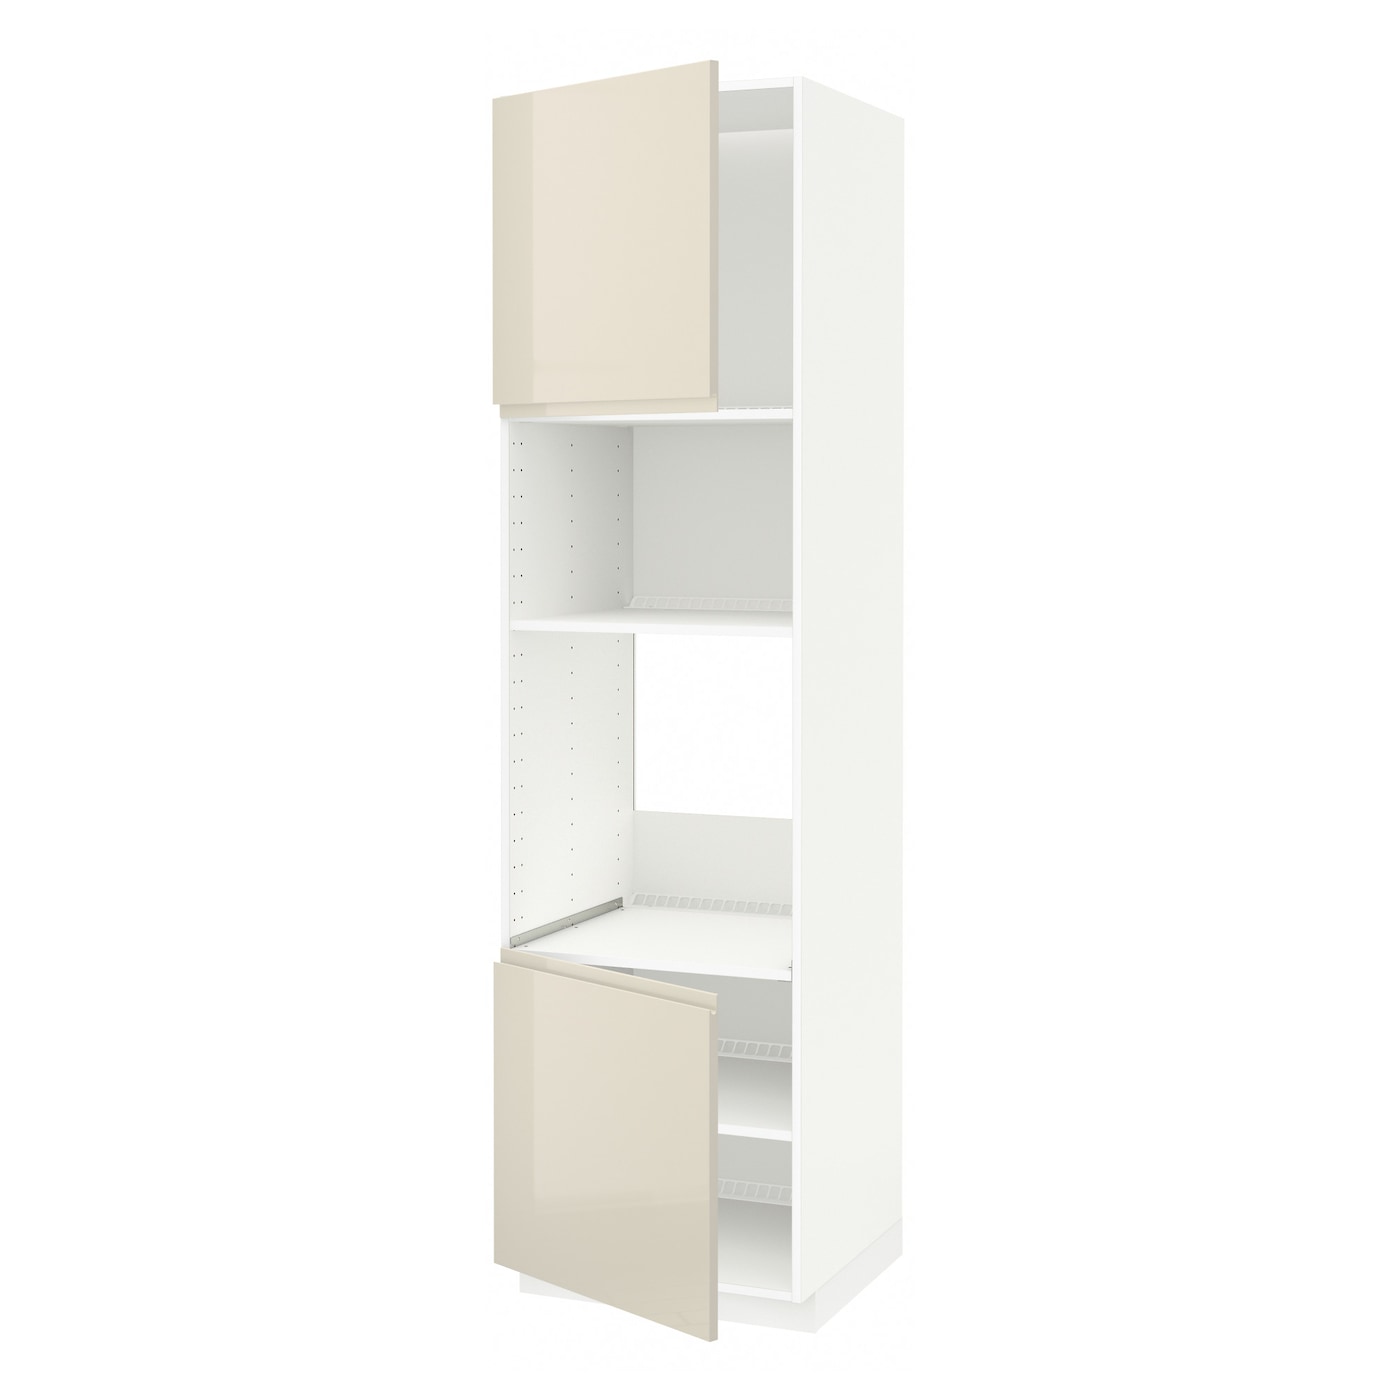 Кухонный шкаф-пенал - IKEA METOD/МЕТОД ИКЕА, 220х60х60 см, белый/бежевый глянцевый